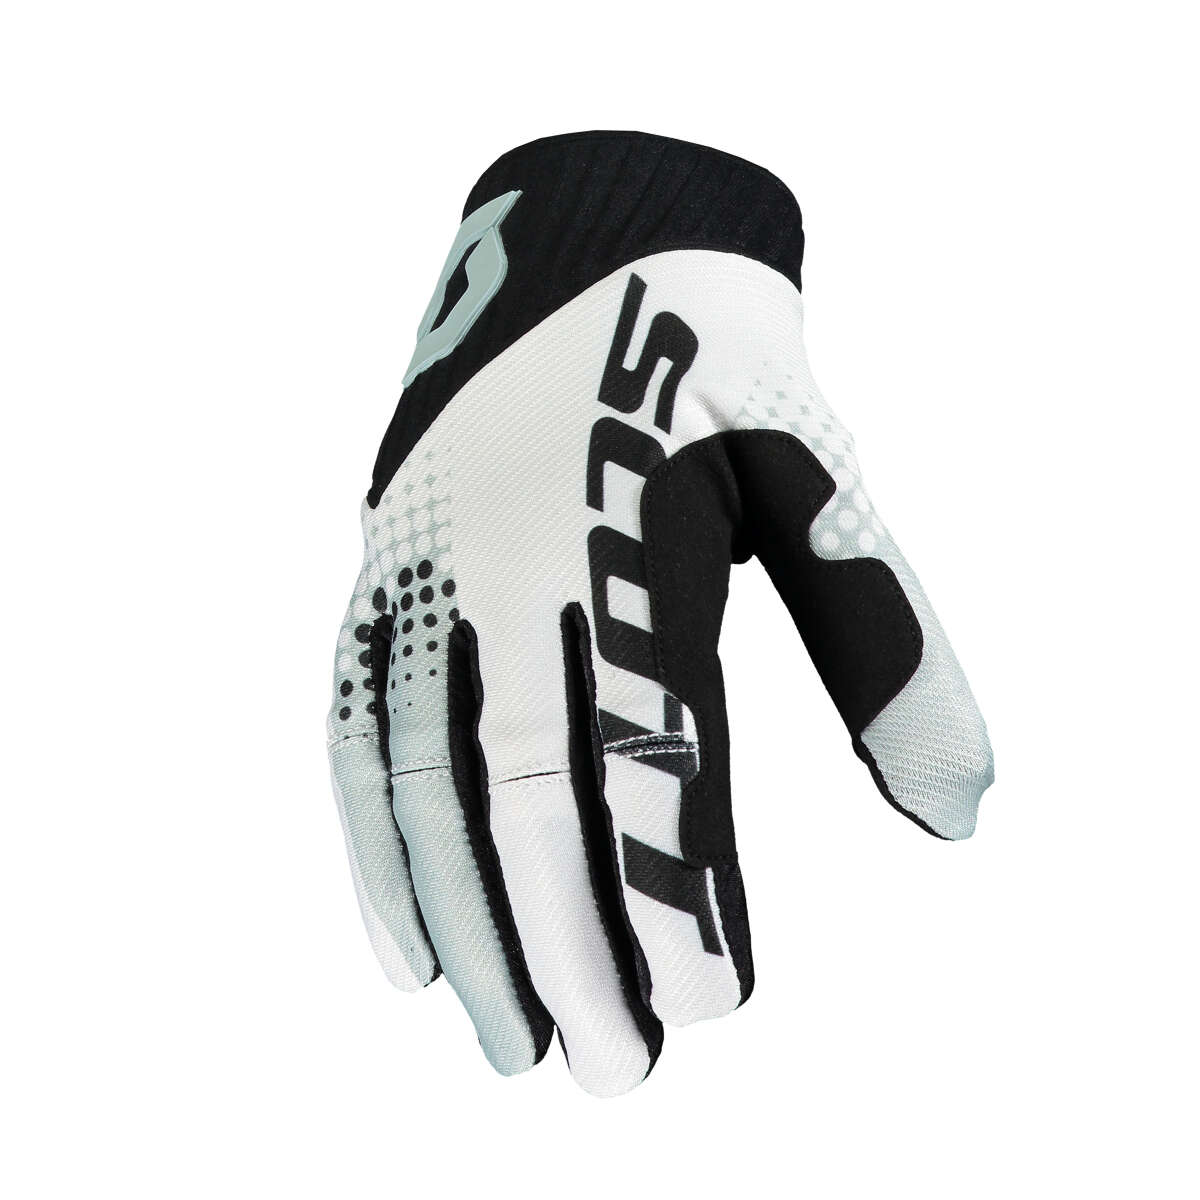 Scott Gloves 450 Angled Black/White